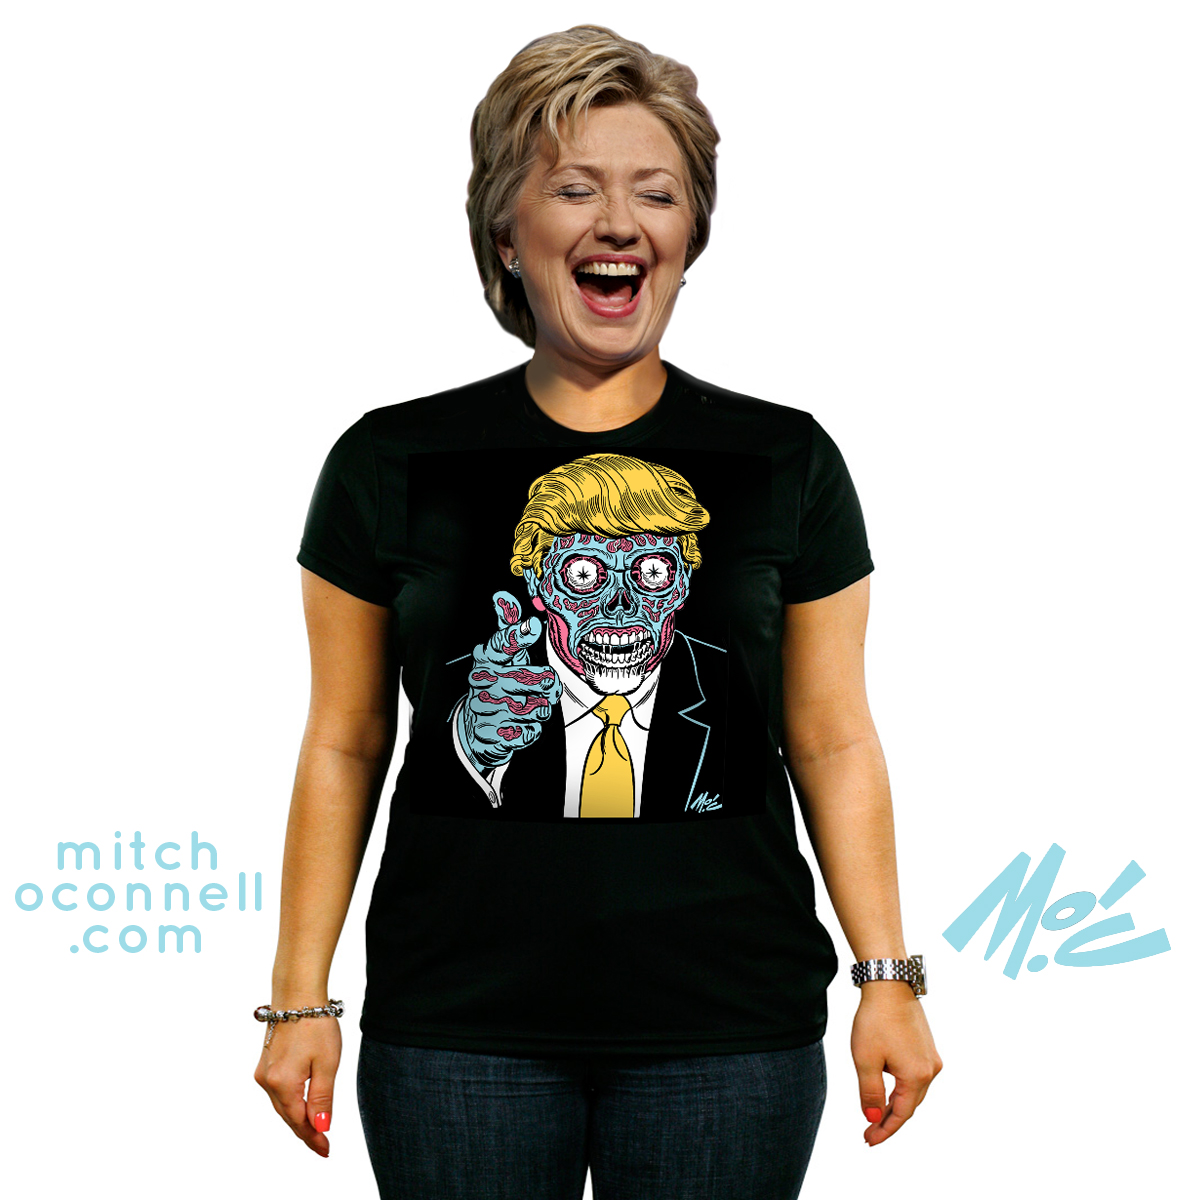 Mitch Oconnell. I Love Trump Shirt. Blue Aliens in Shirt.